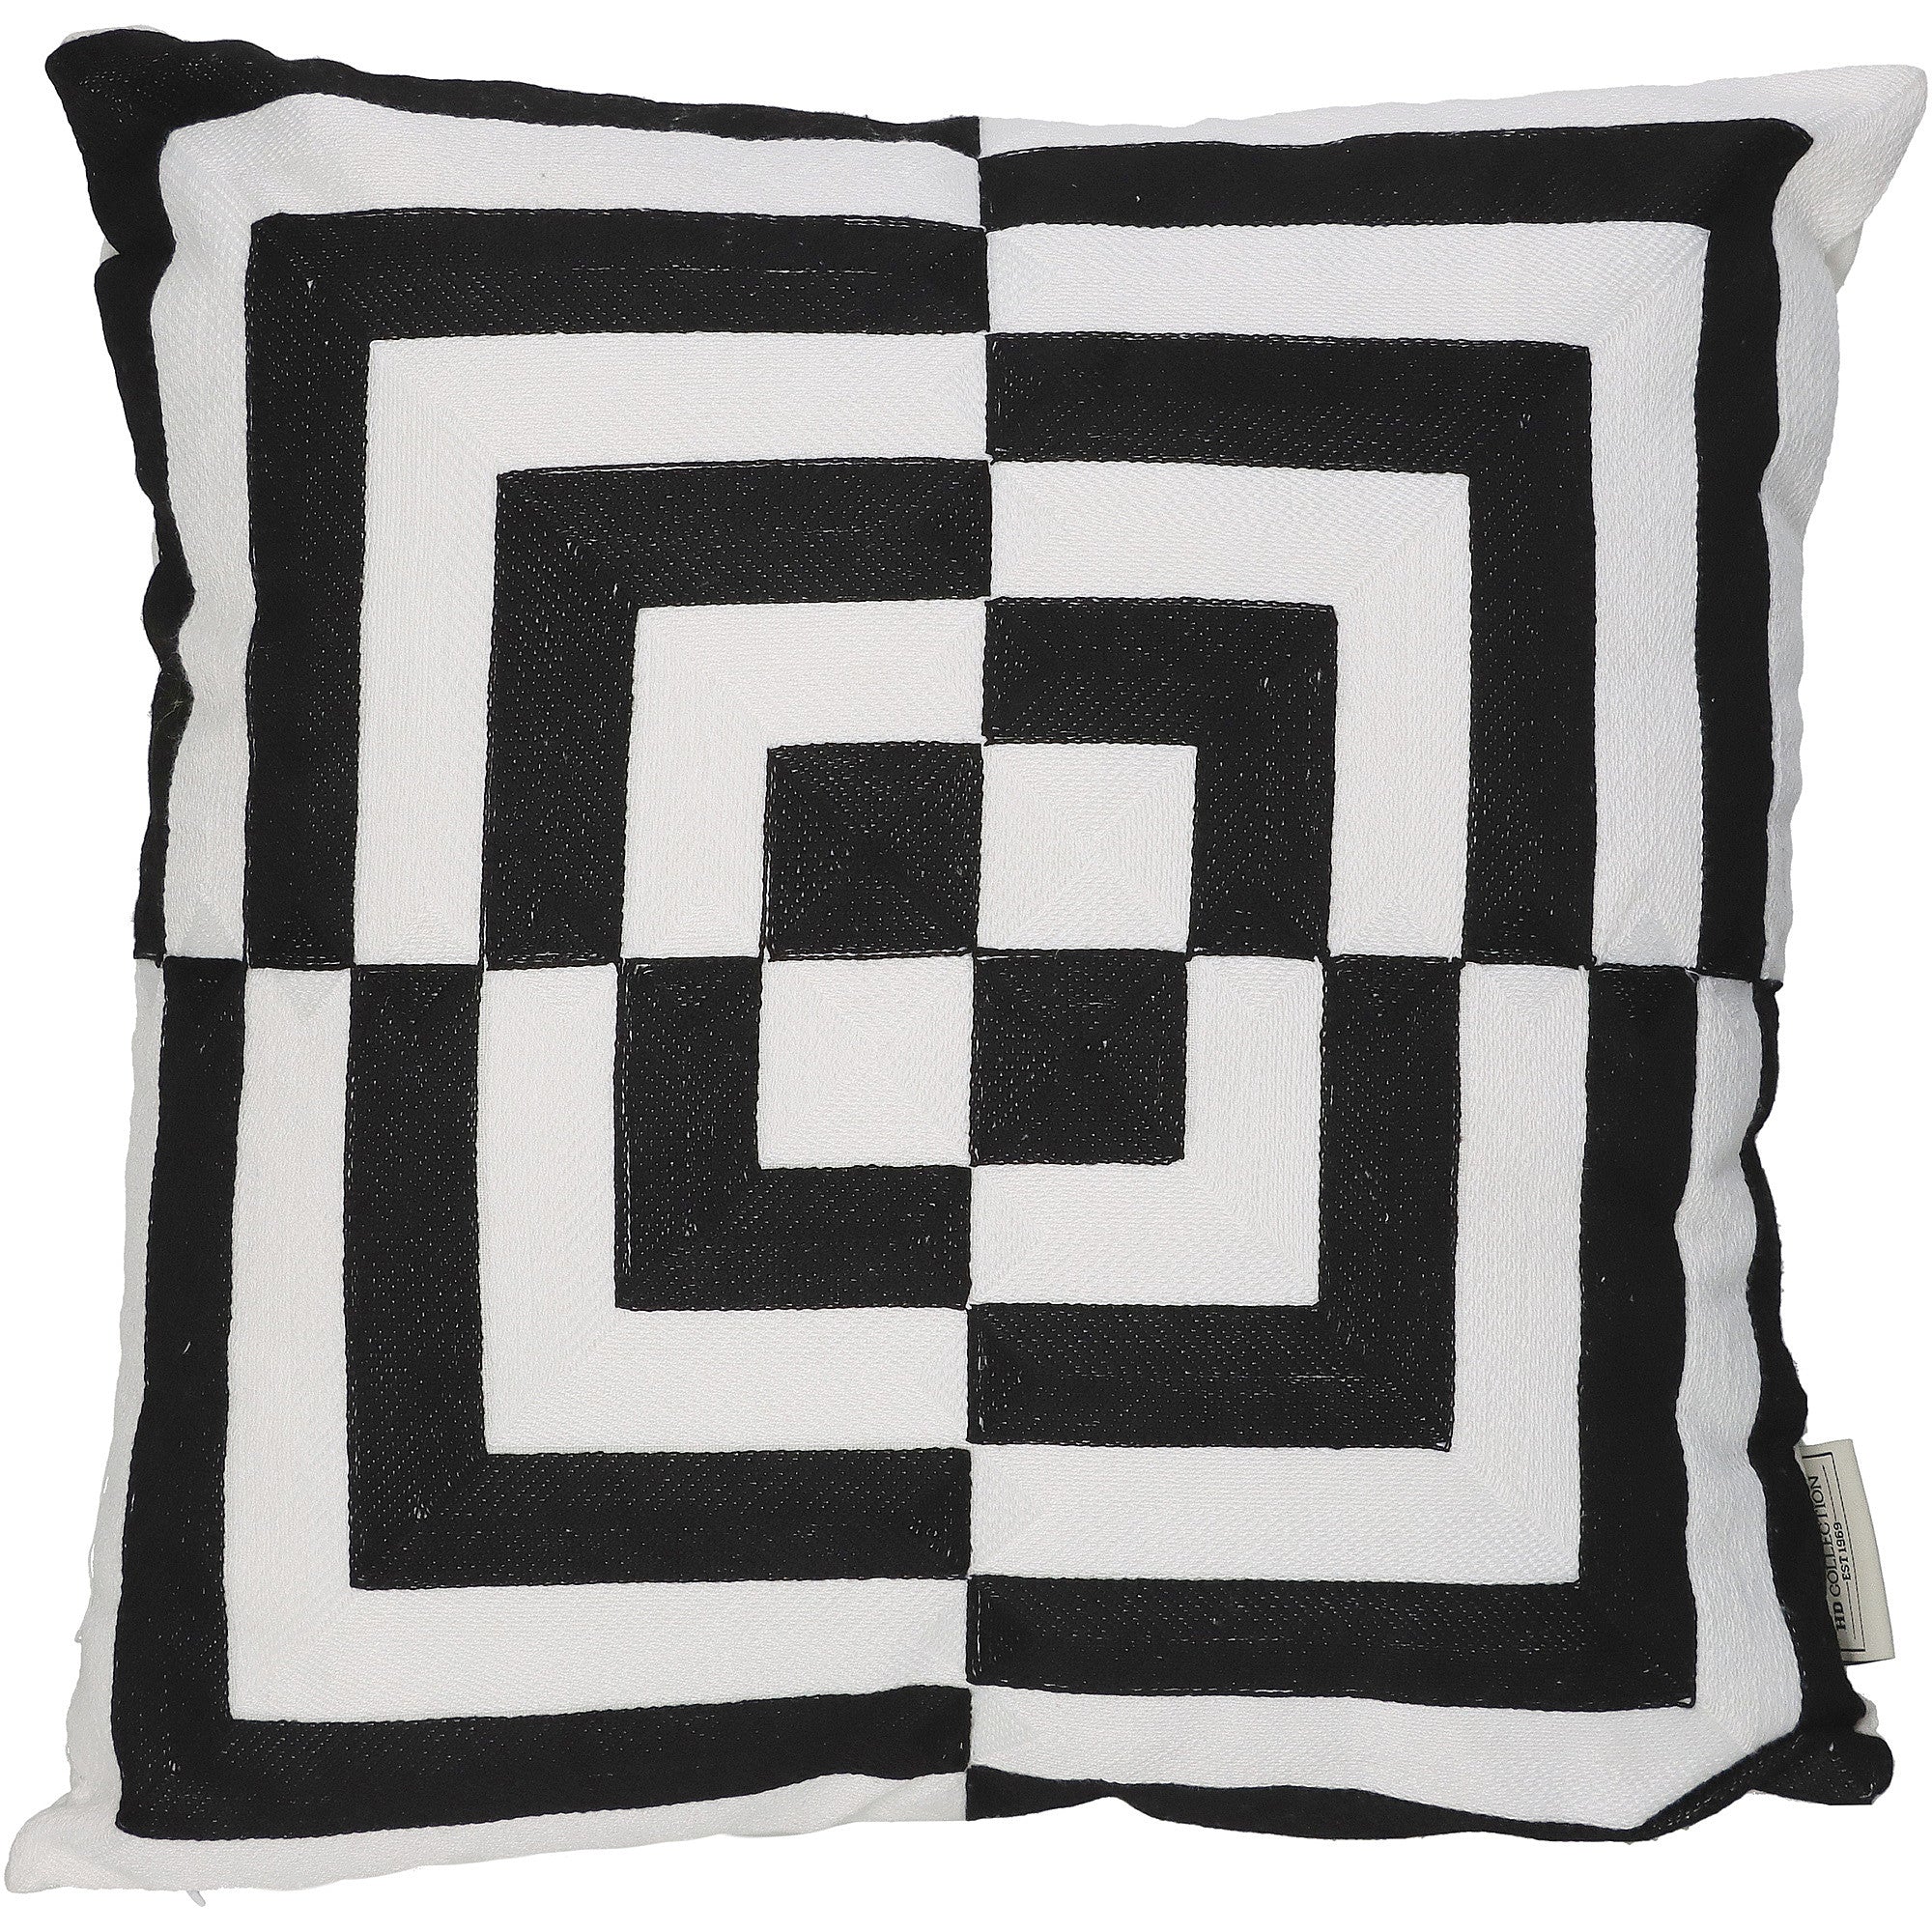 Monochrome Geometric Patterned Cushion